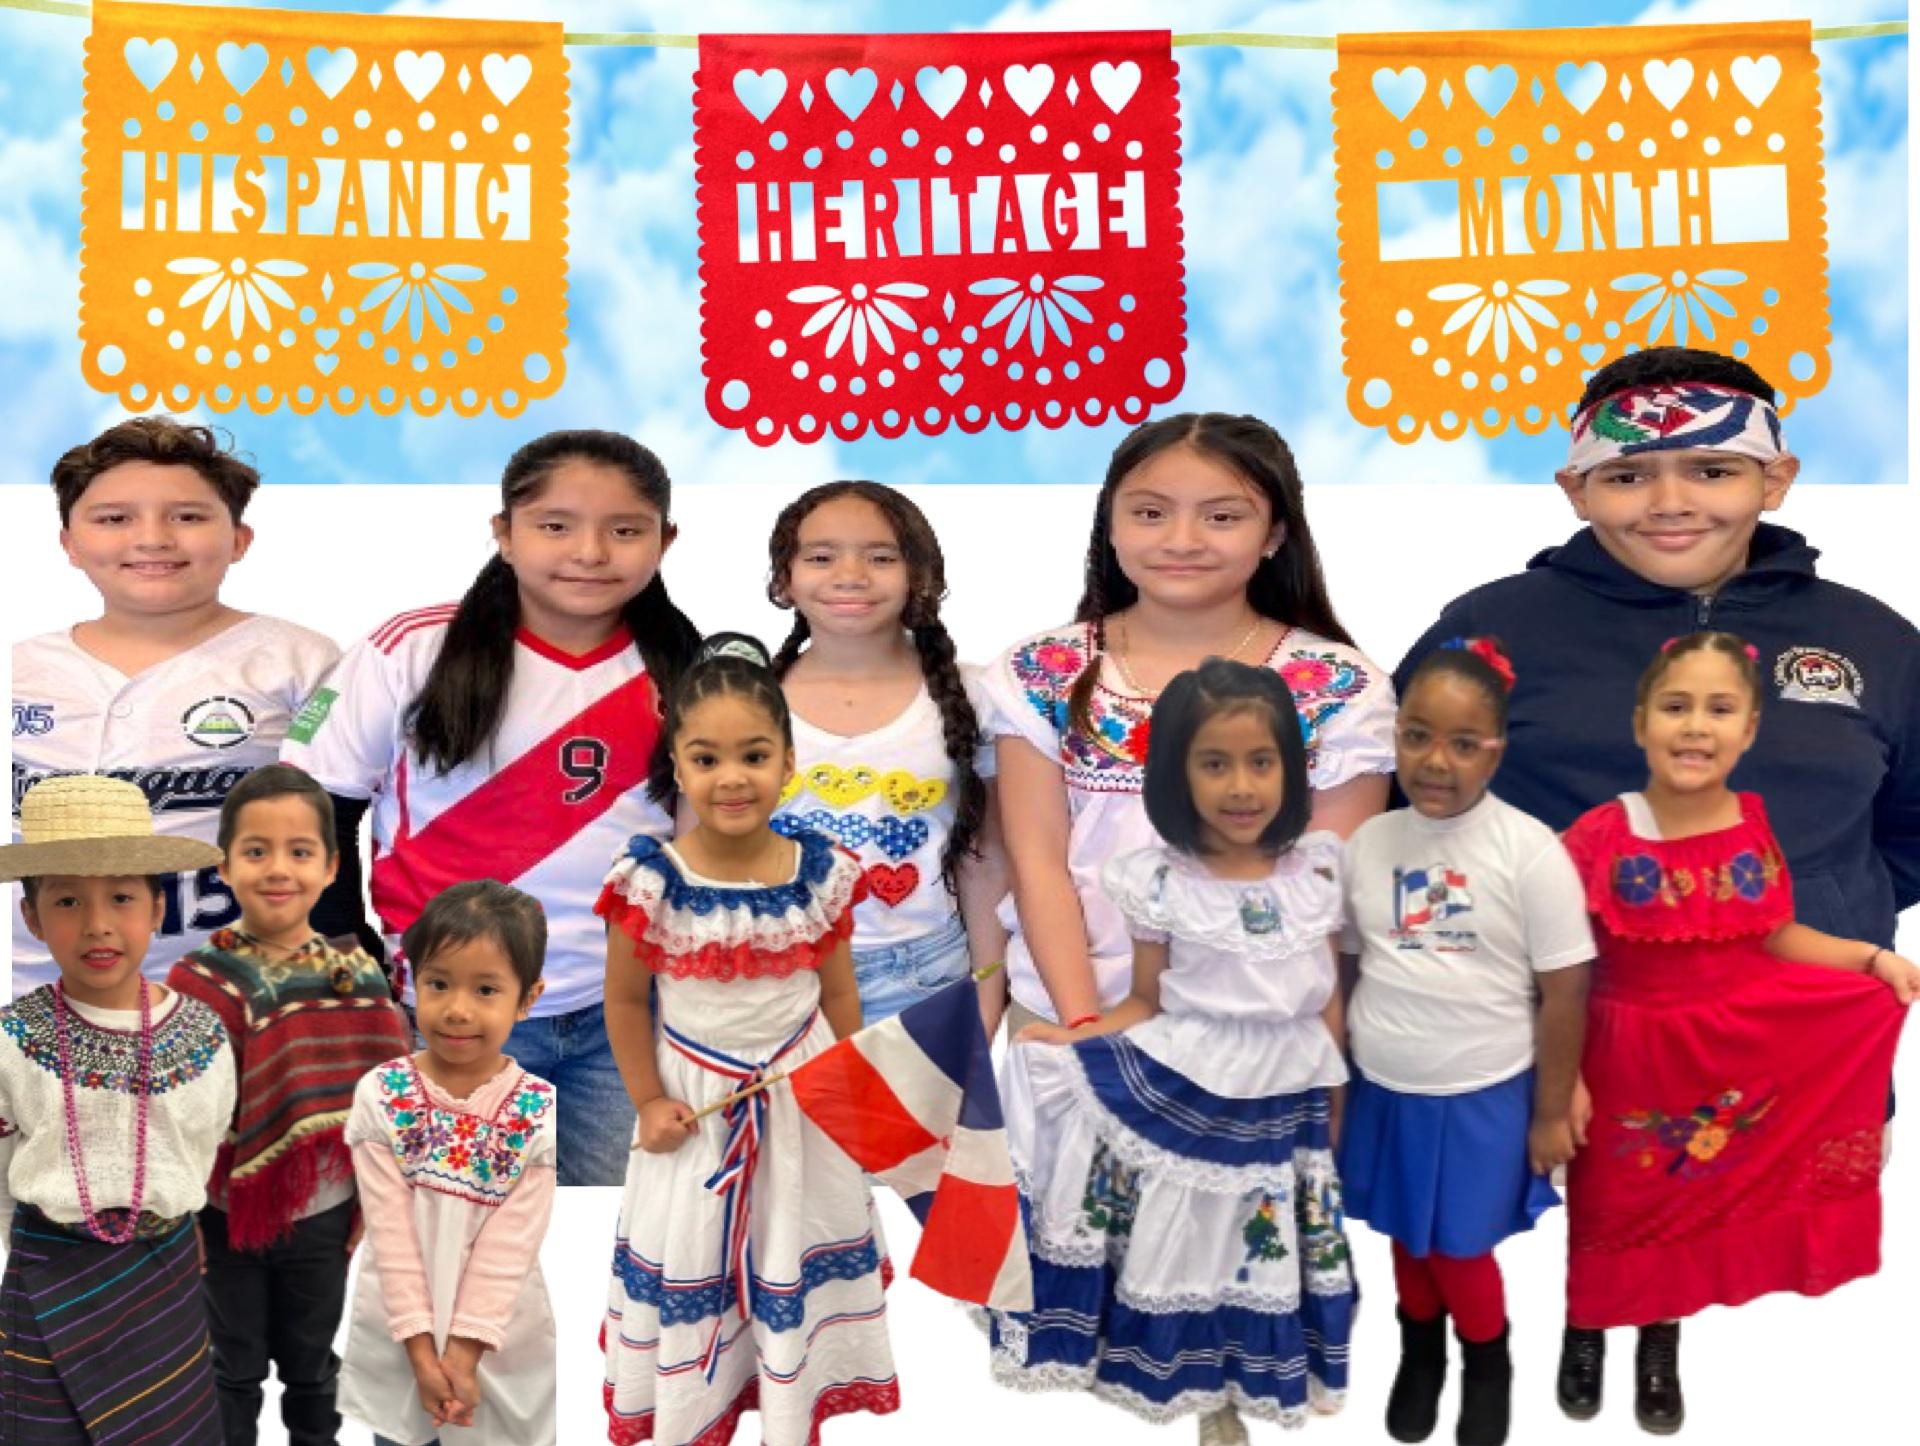 Celebrating Hispanic Heritage Month at the Robert Waters School